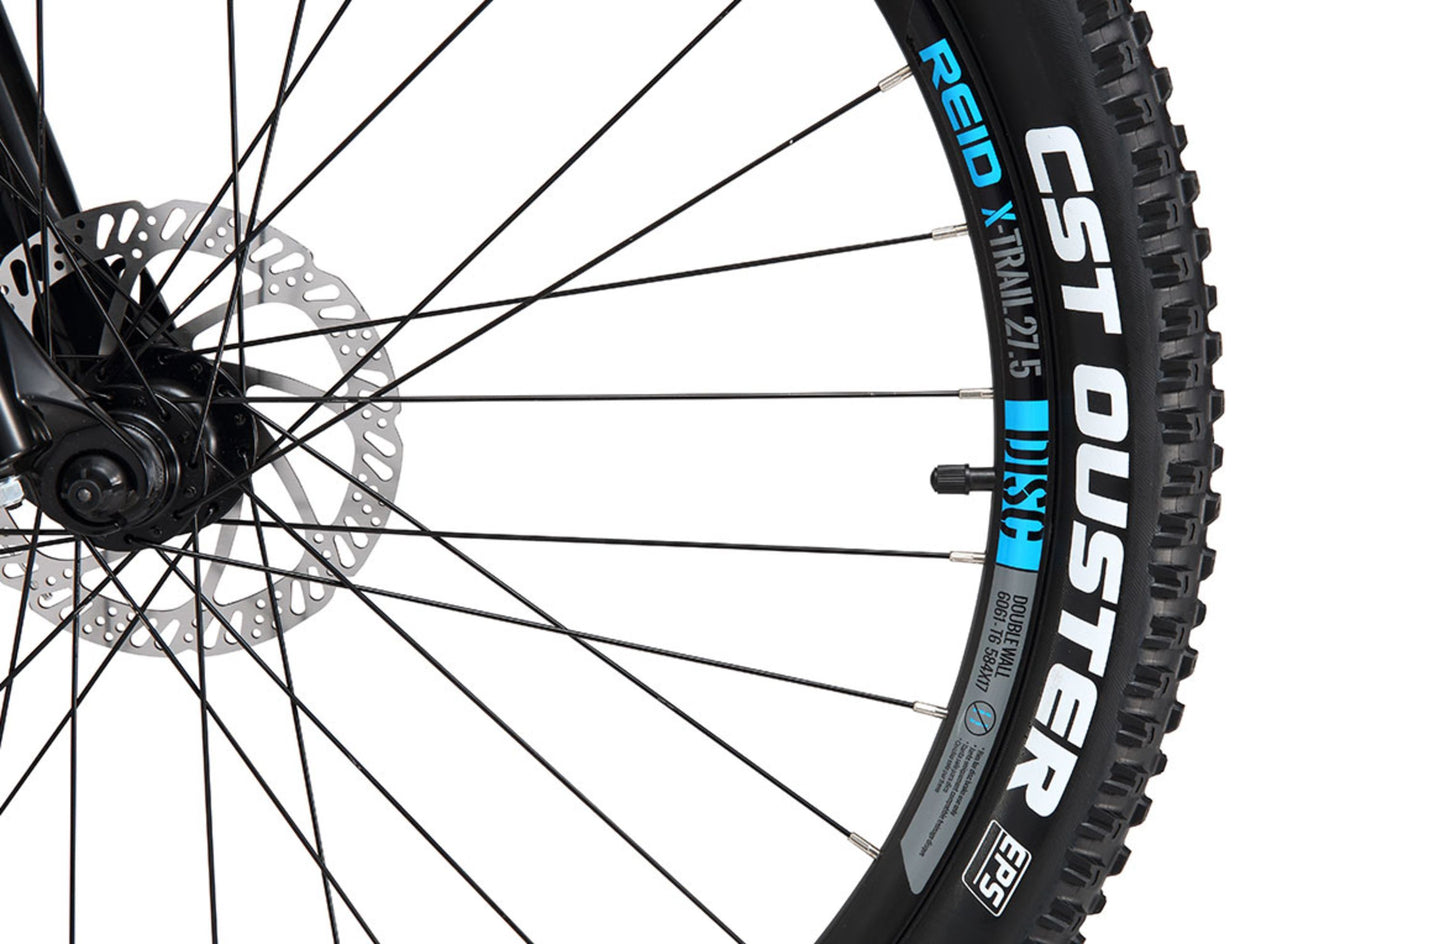 X-trail Mountain Bike in Gloss Black showing CST mountain bike tyre from Reid Cycles Australia 